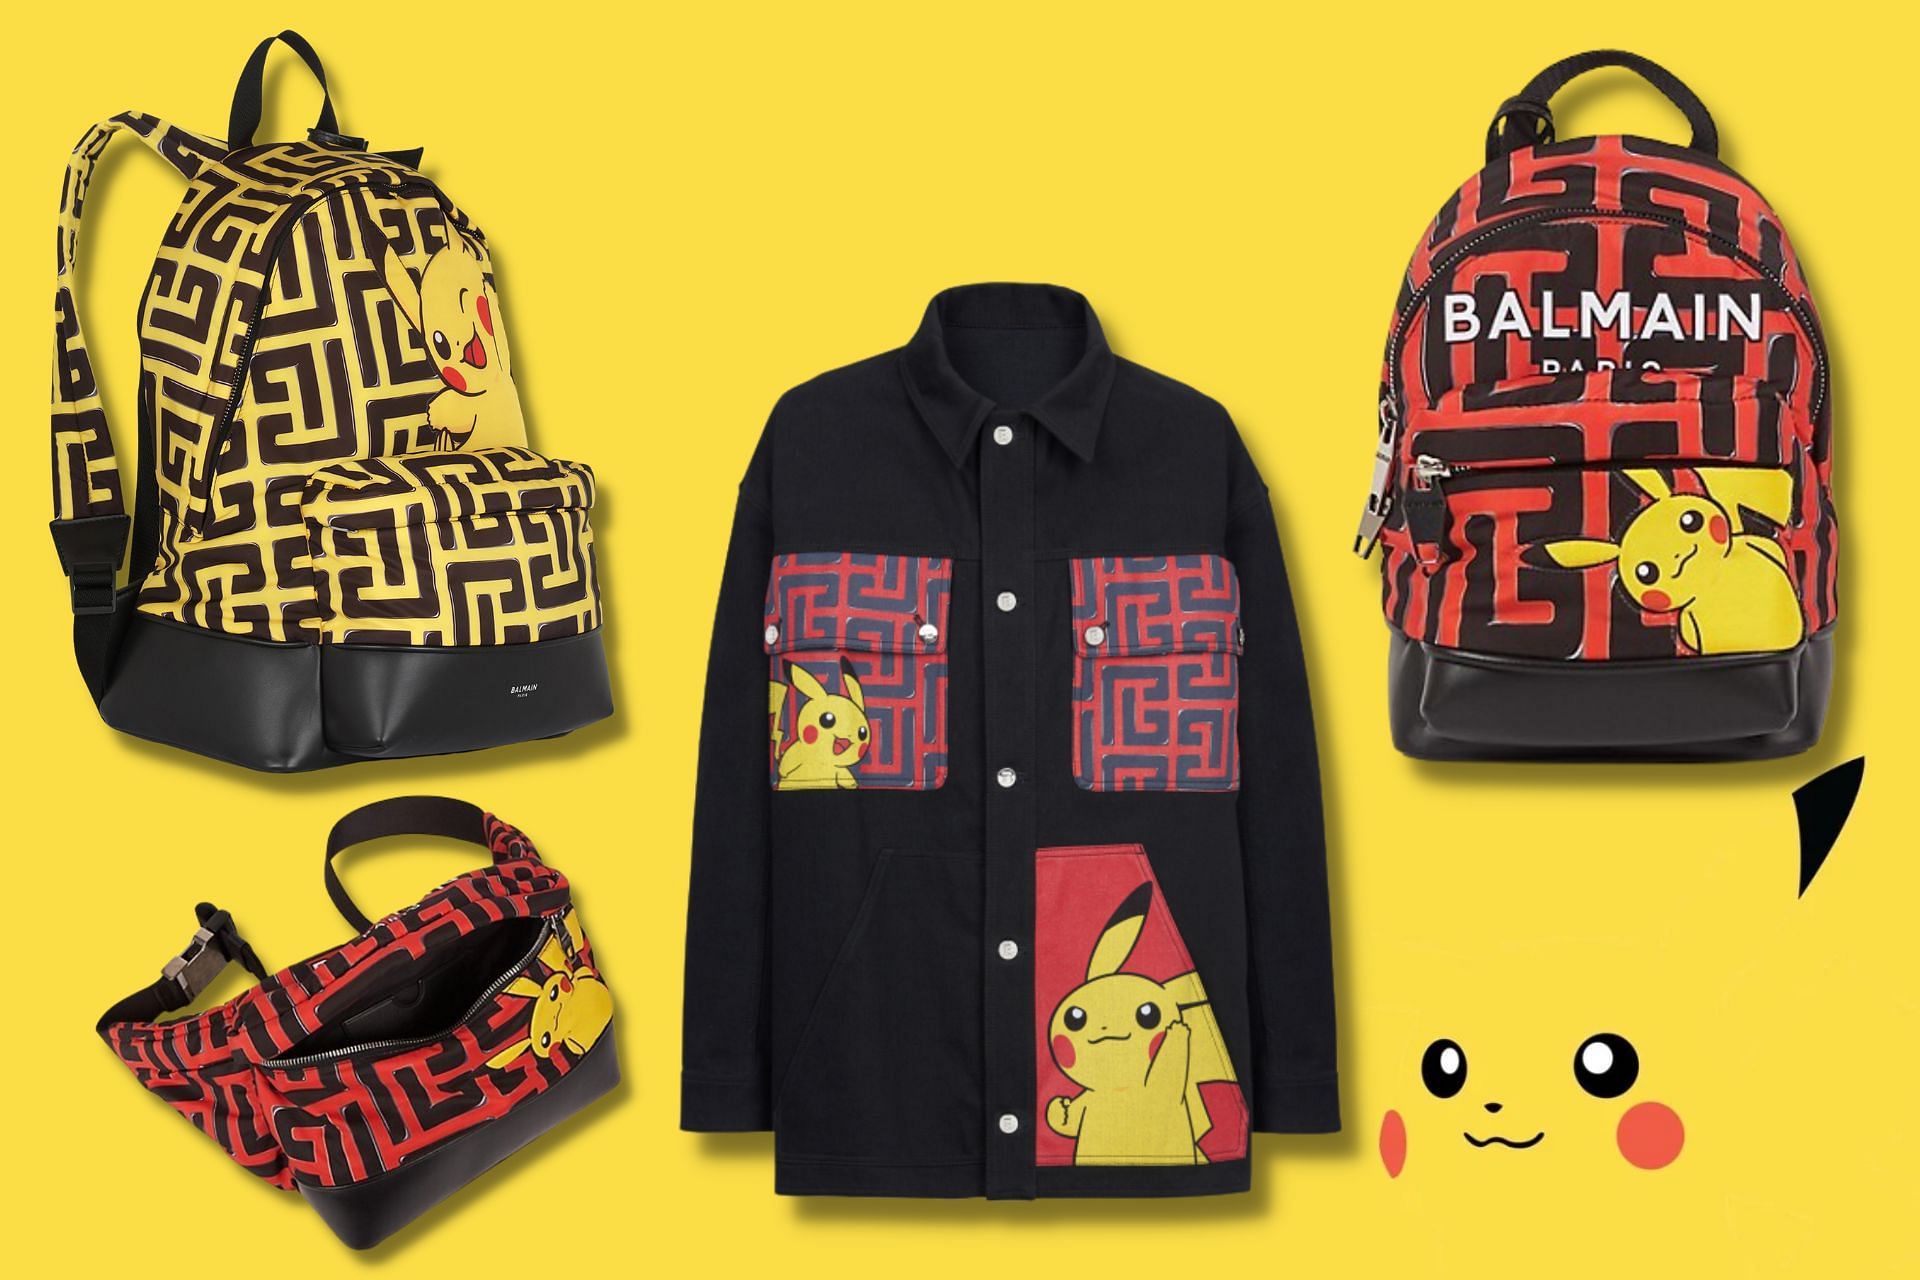 Upcoming Balmain x Pokemon apparel and accessories collection (Image via Sportskeeda)